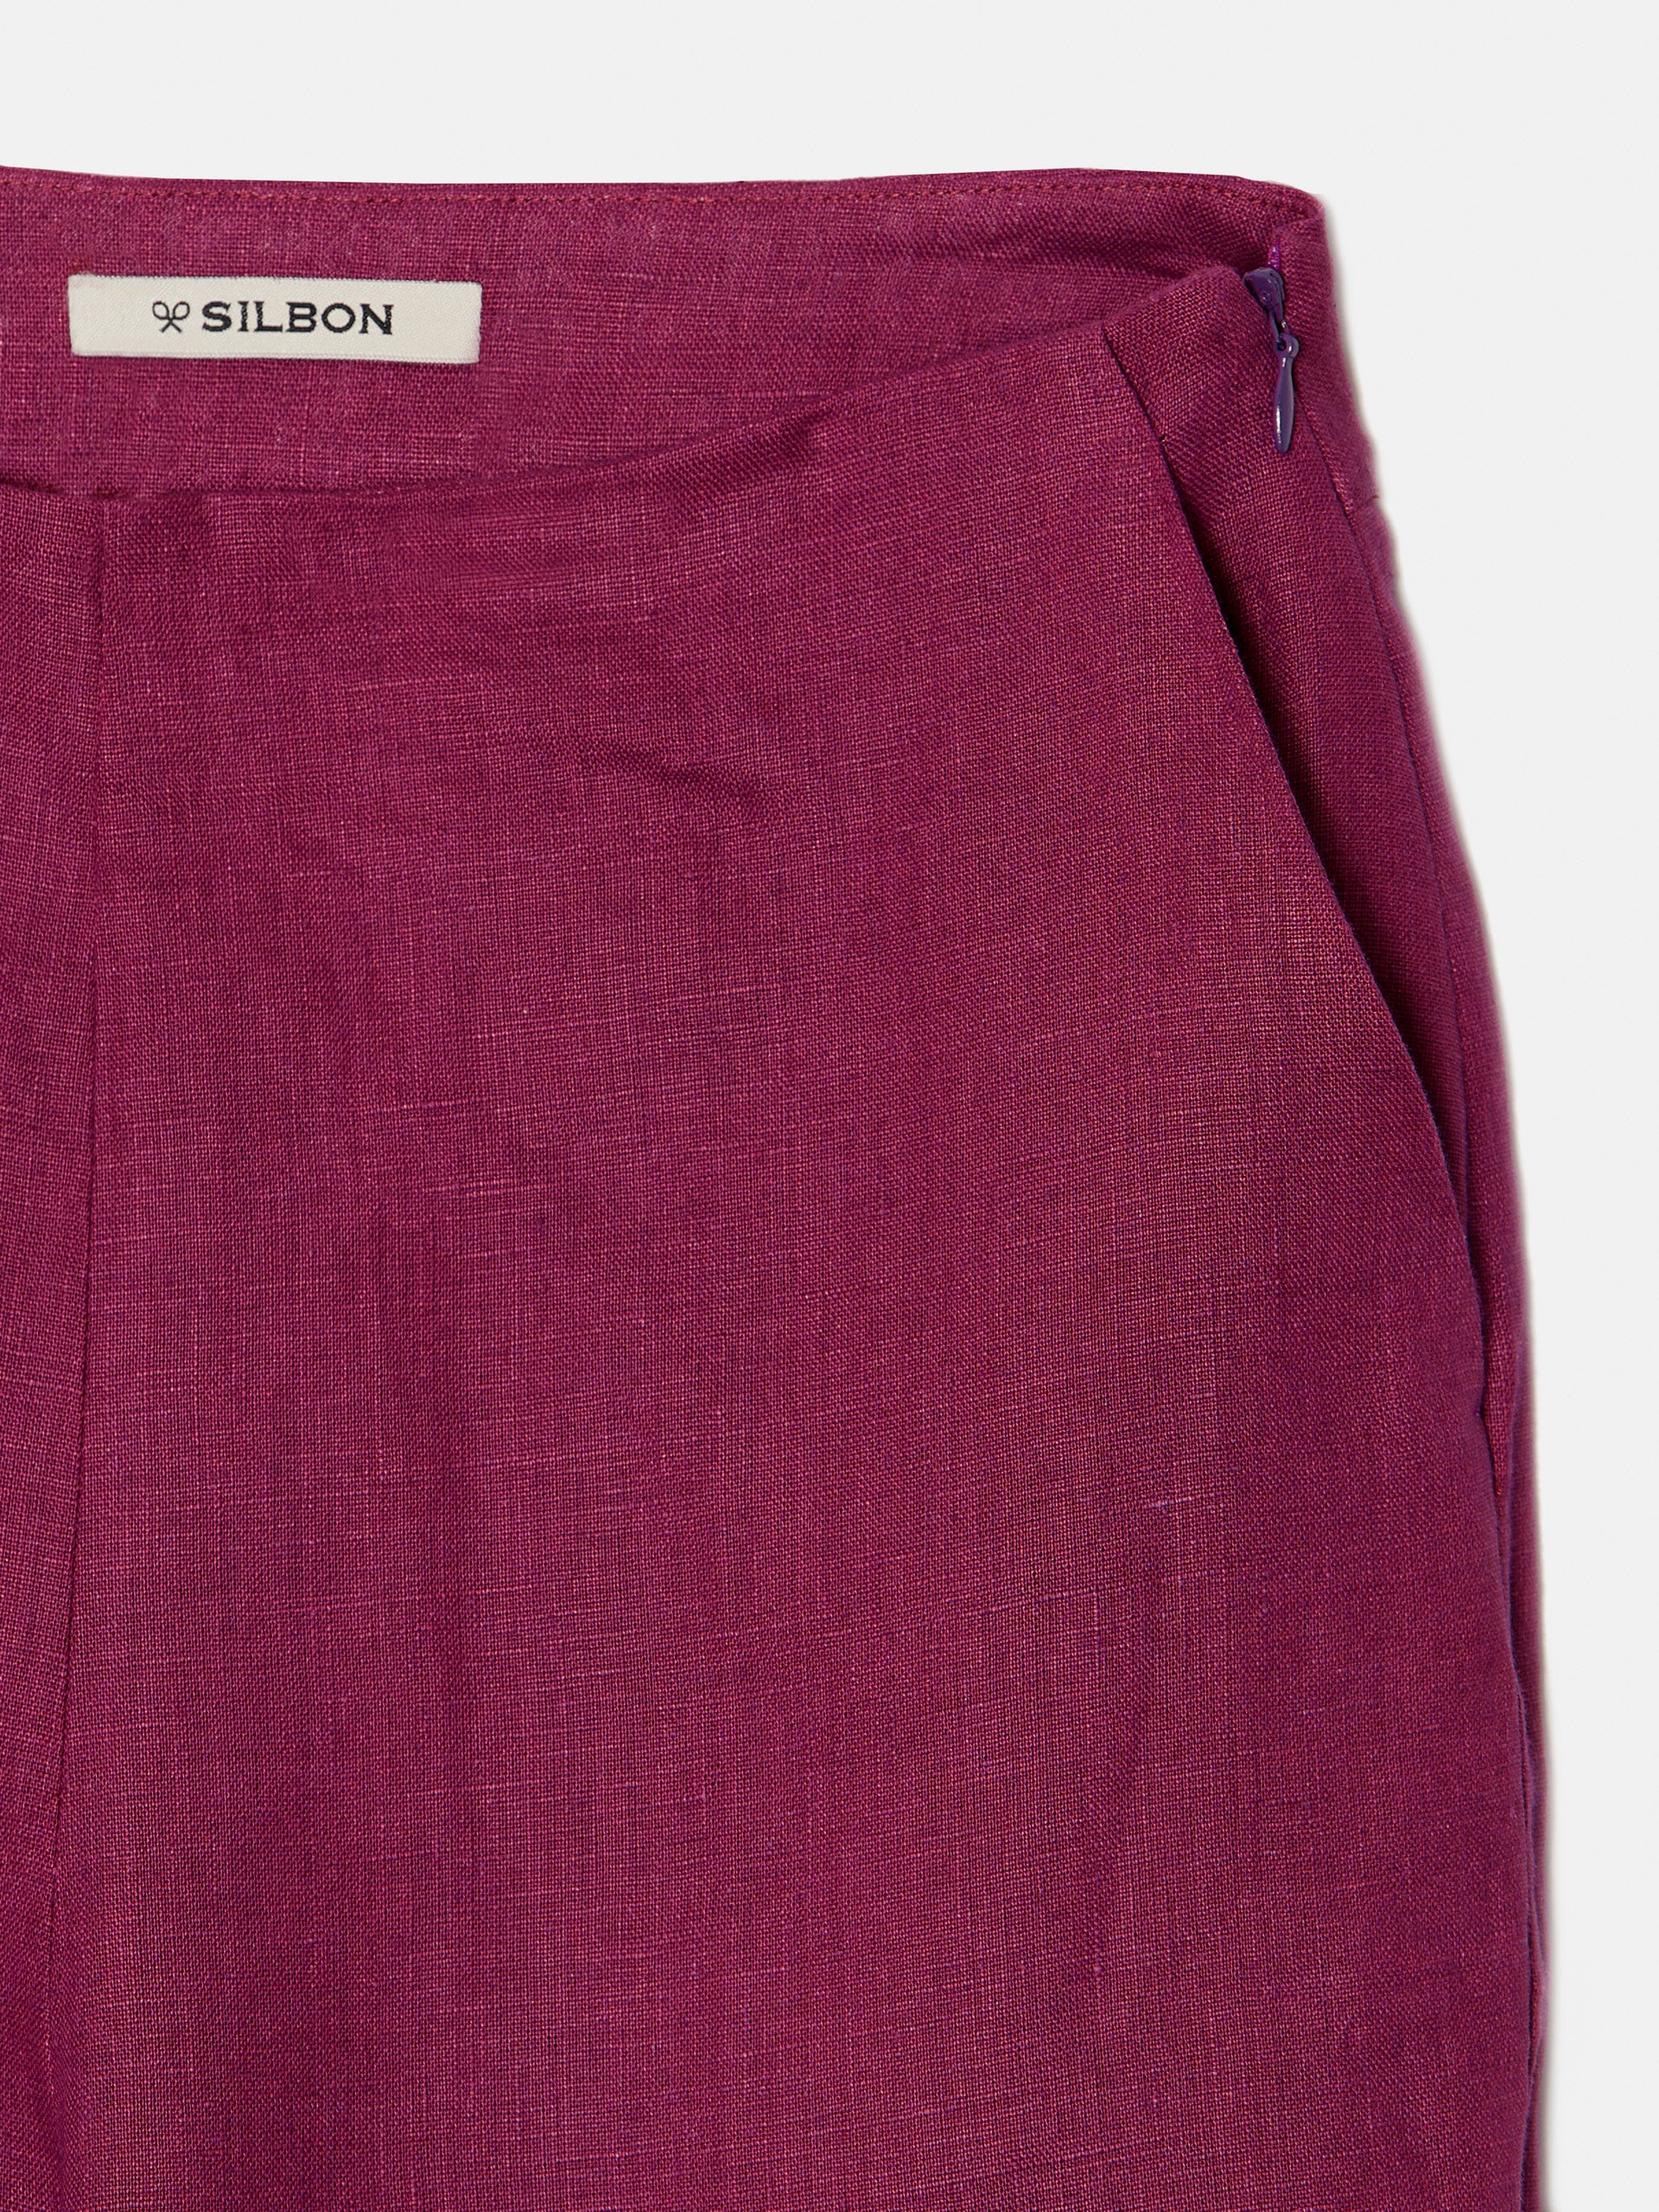 Raspberry linen pants